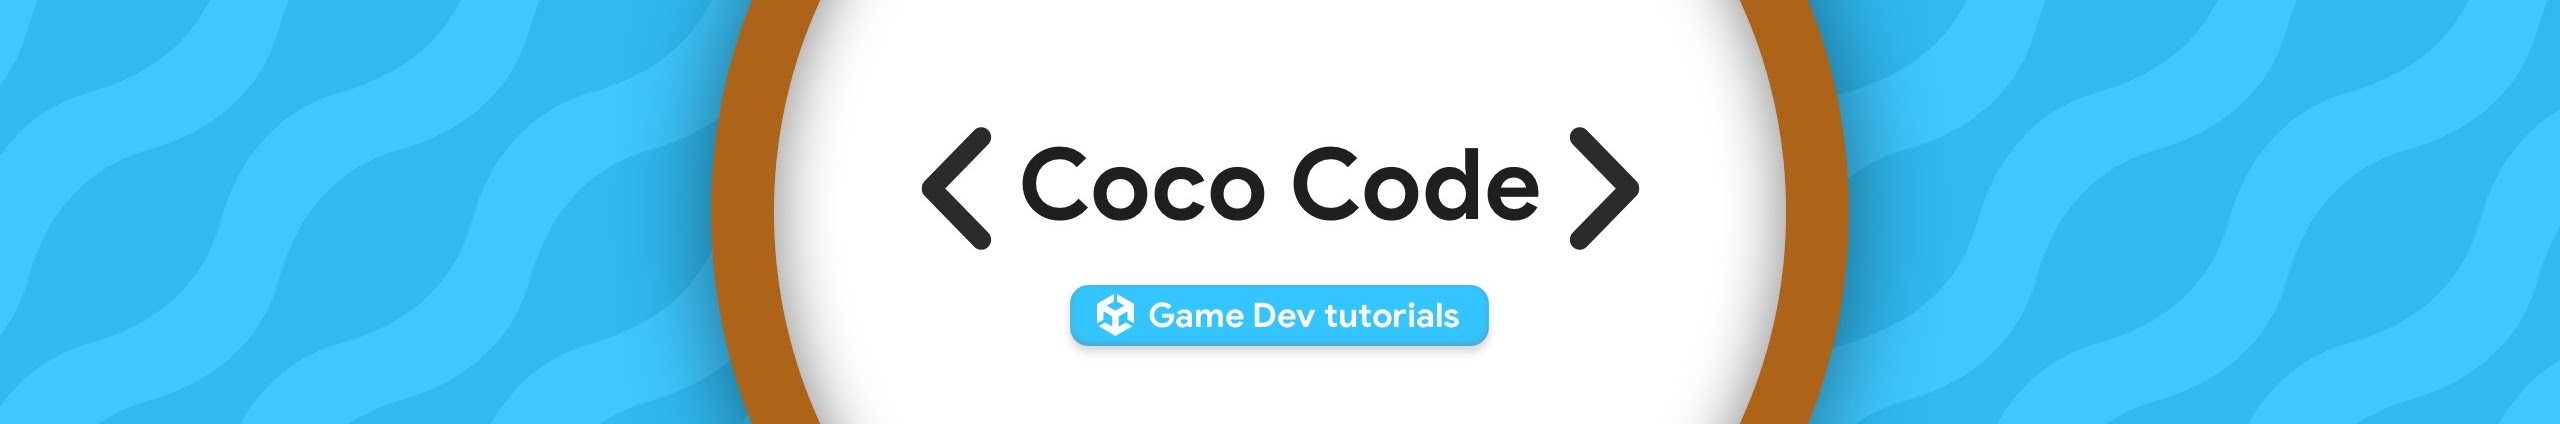 Coco Code